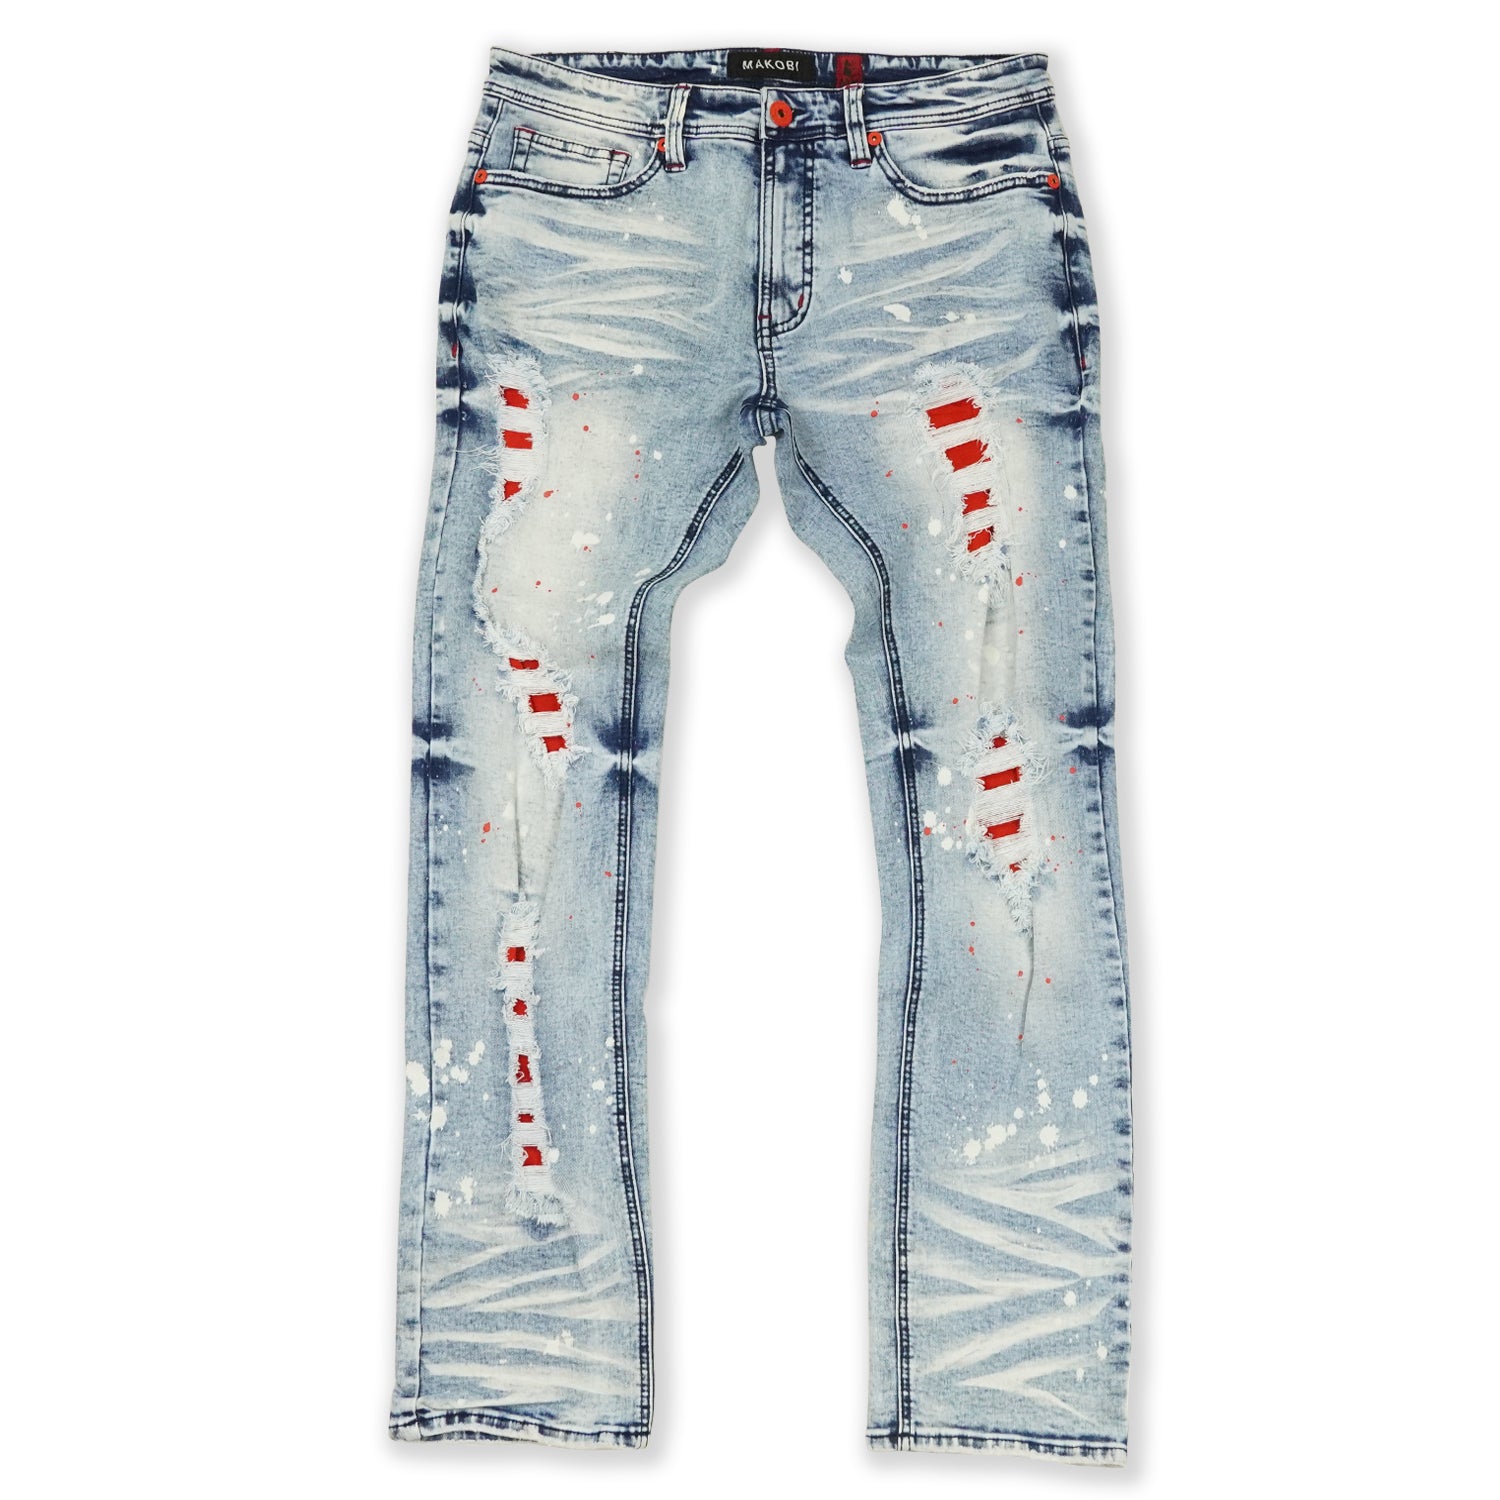 M1969 Bondi Shredded Jeans - Light Wash